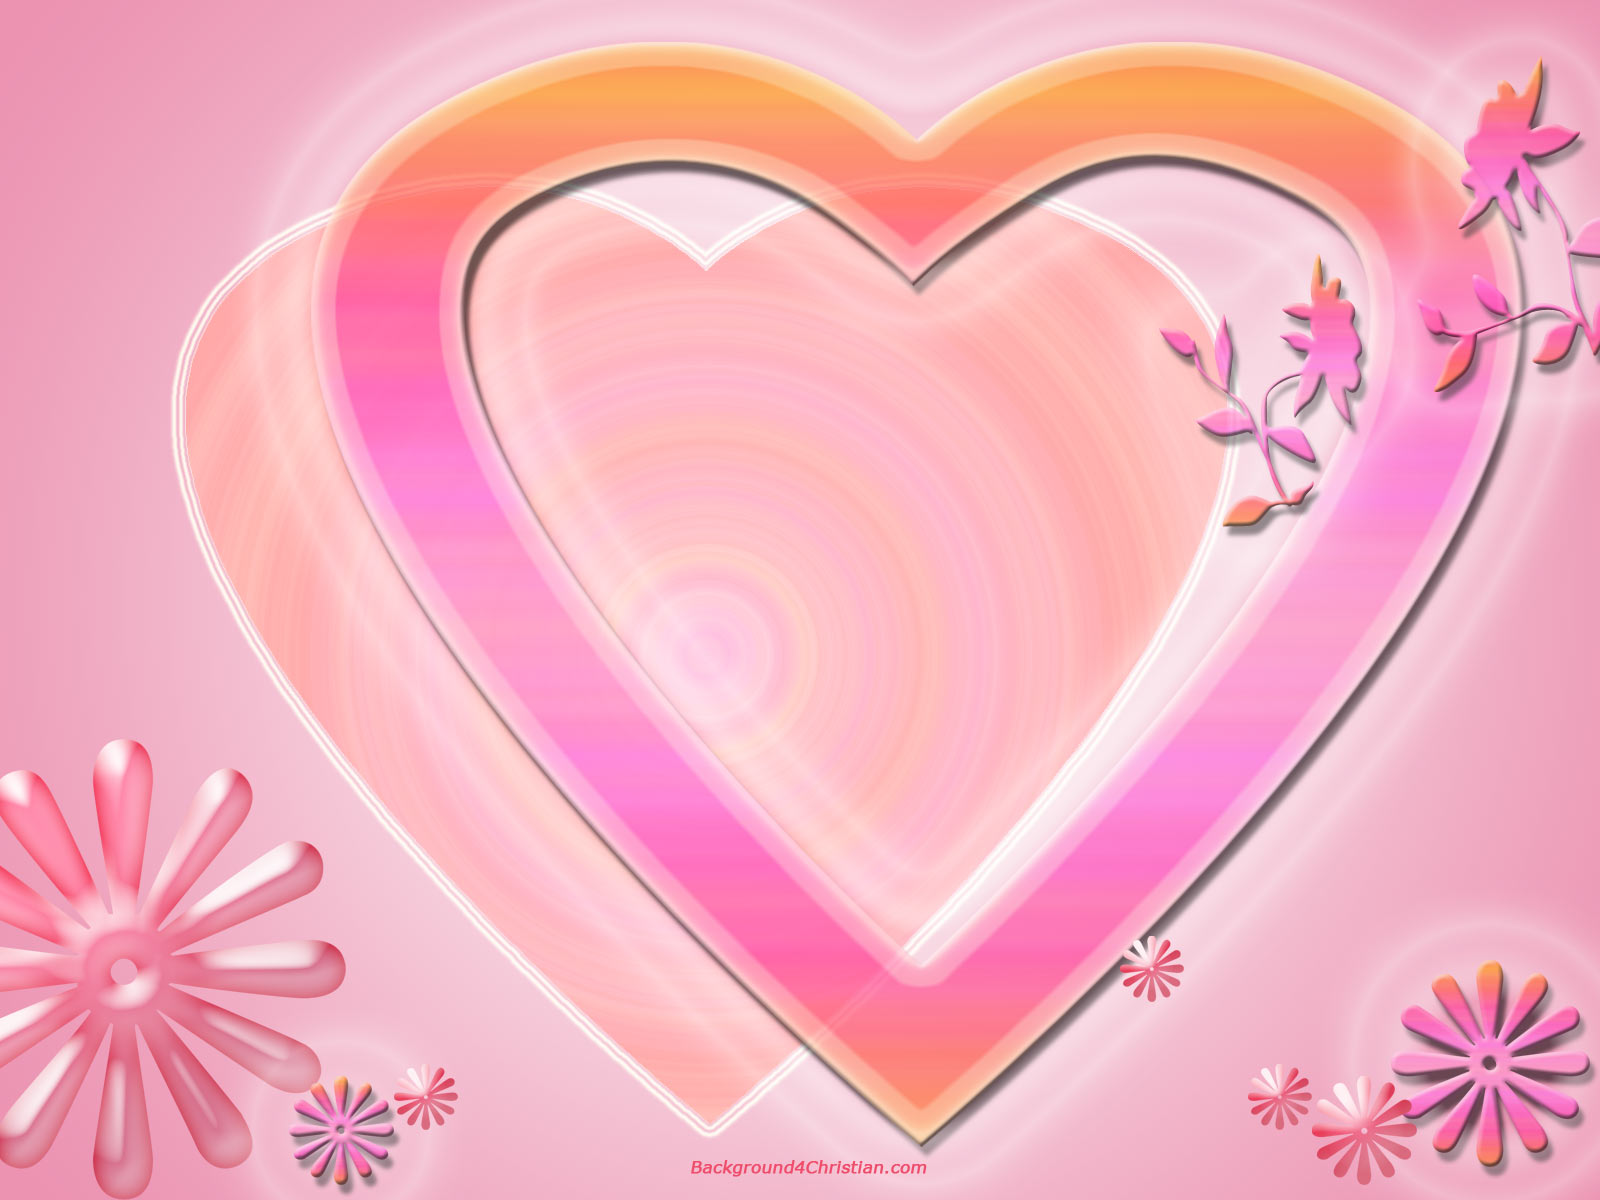 Download Hearts wallpaper pink valentine heart